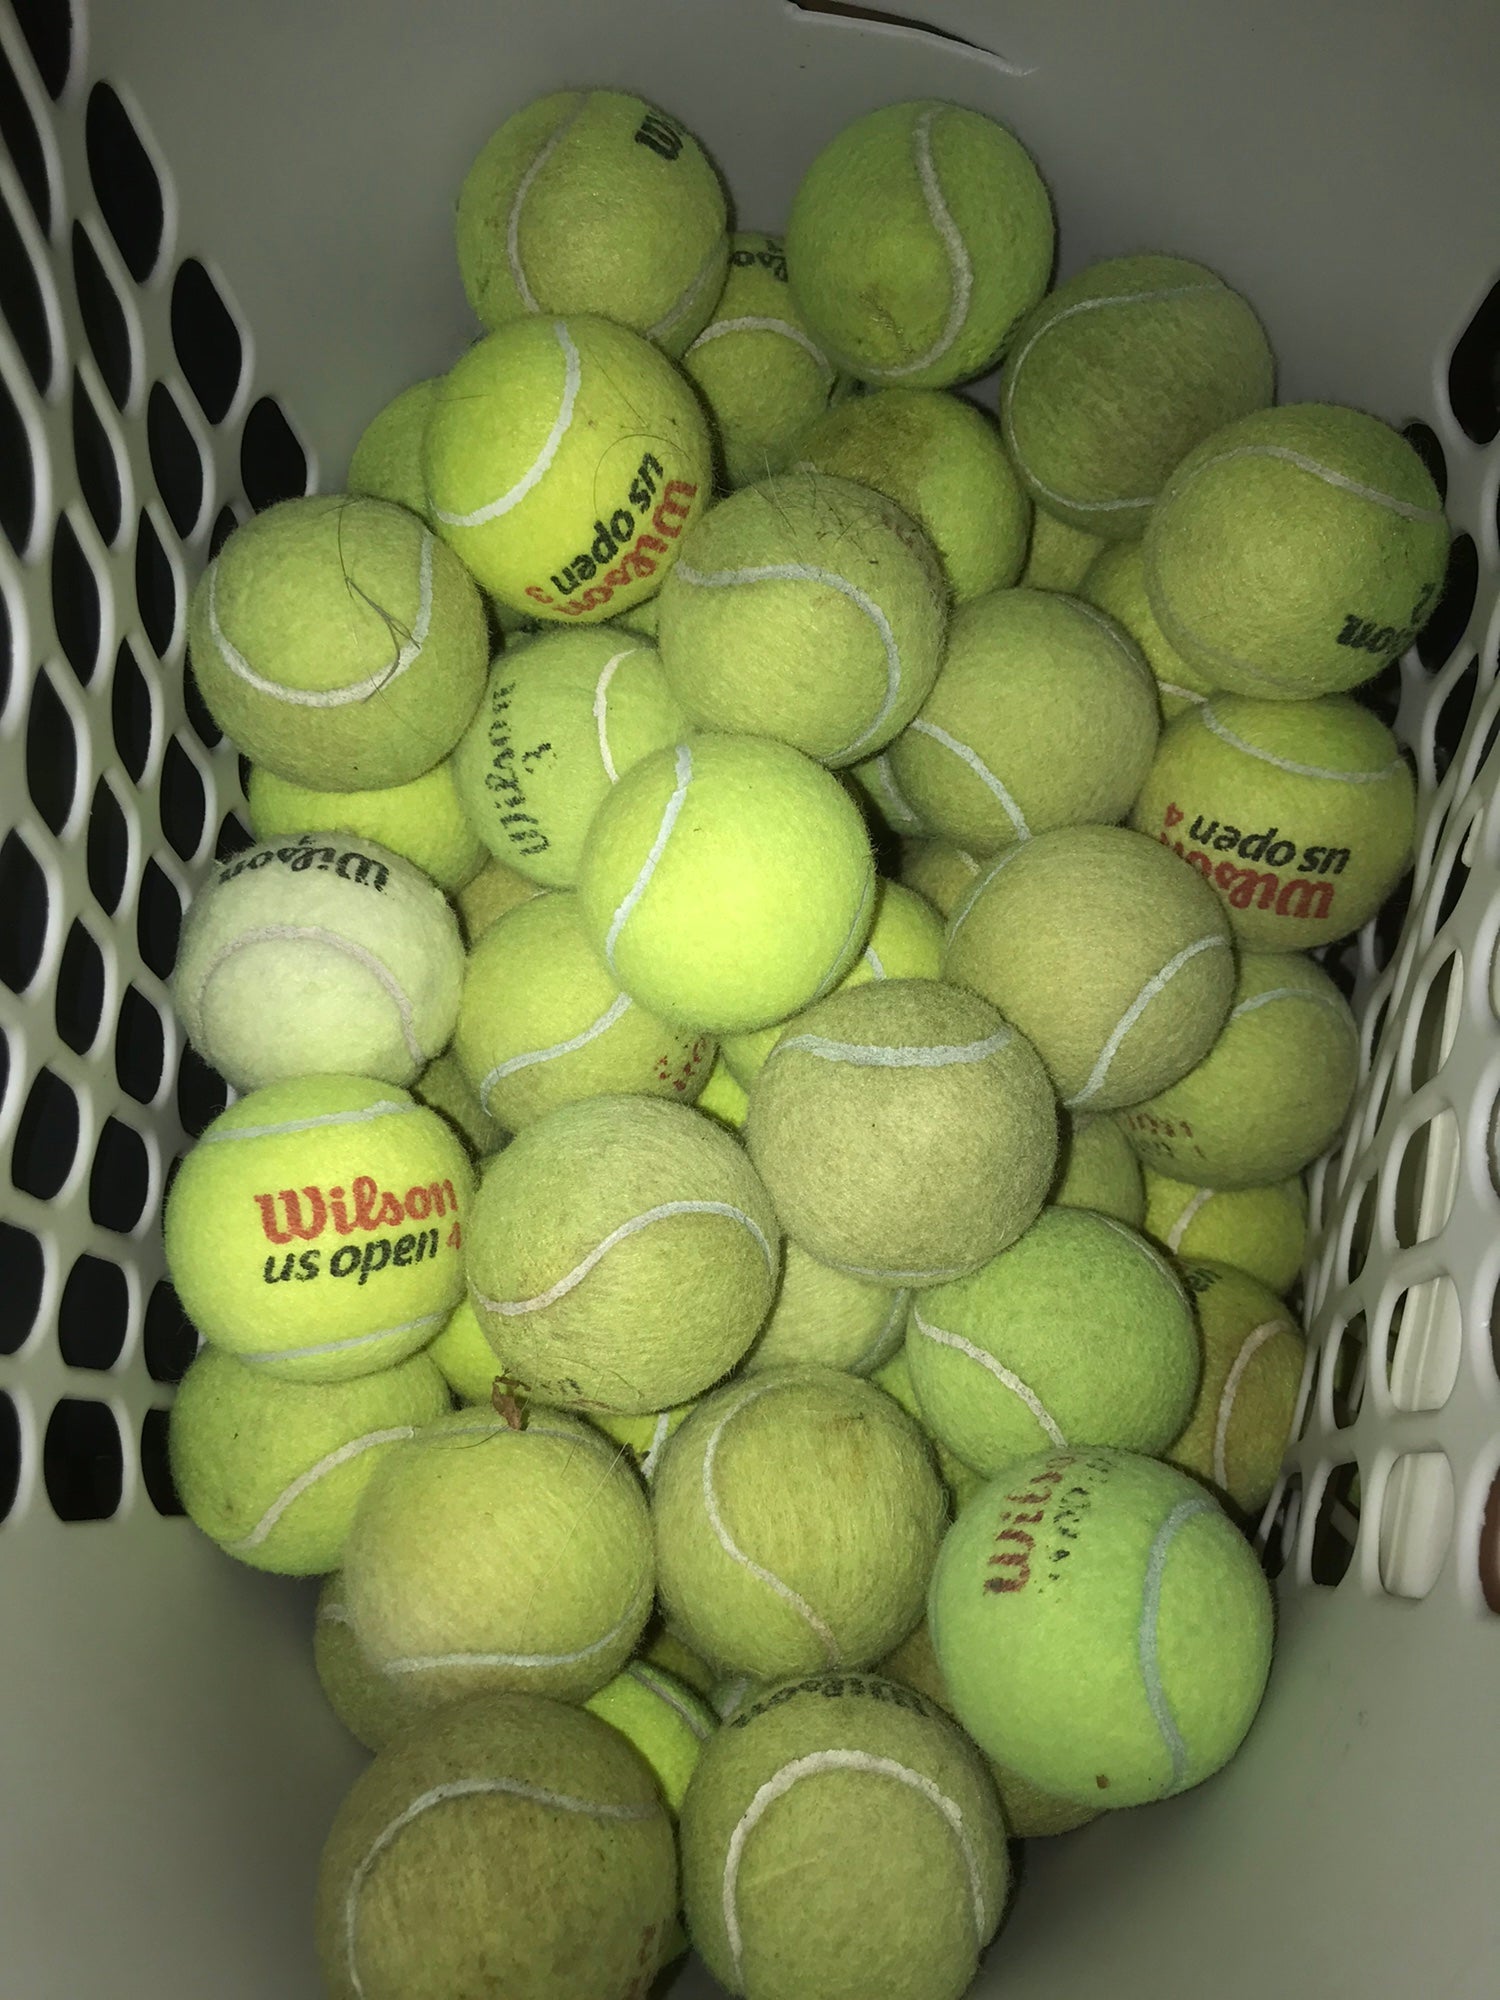 25 Used Tennis Balls 